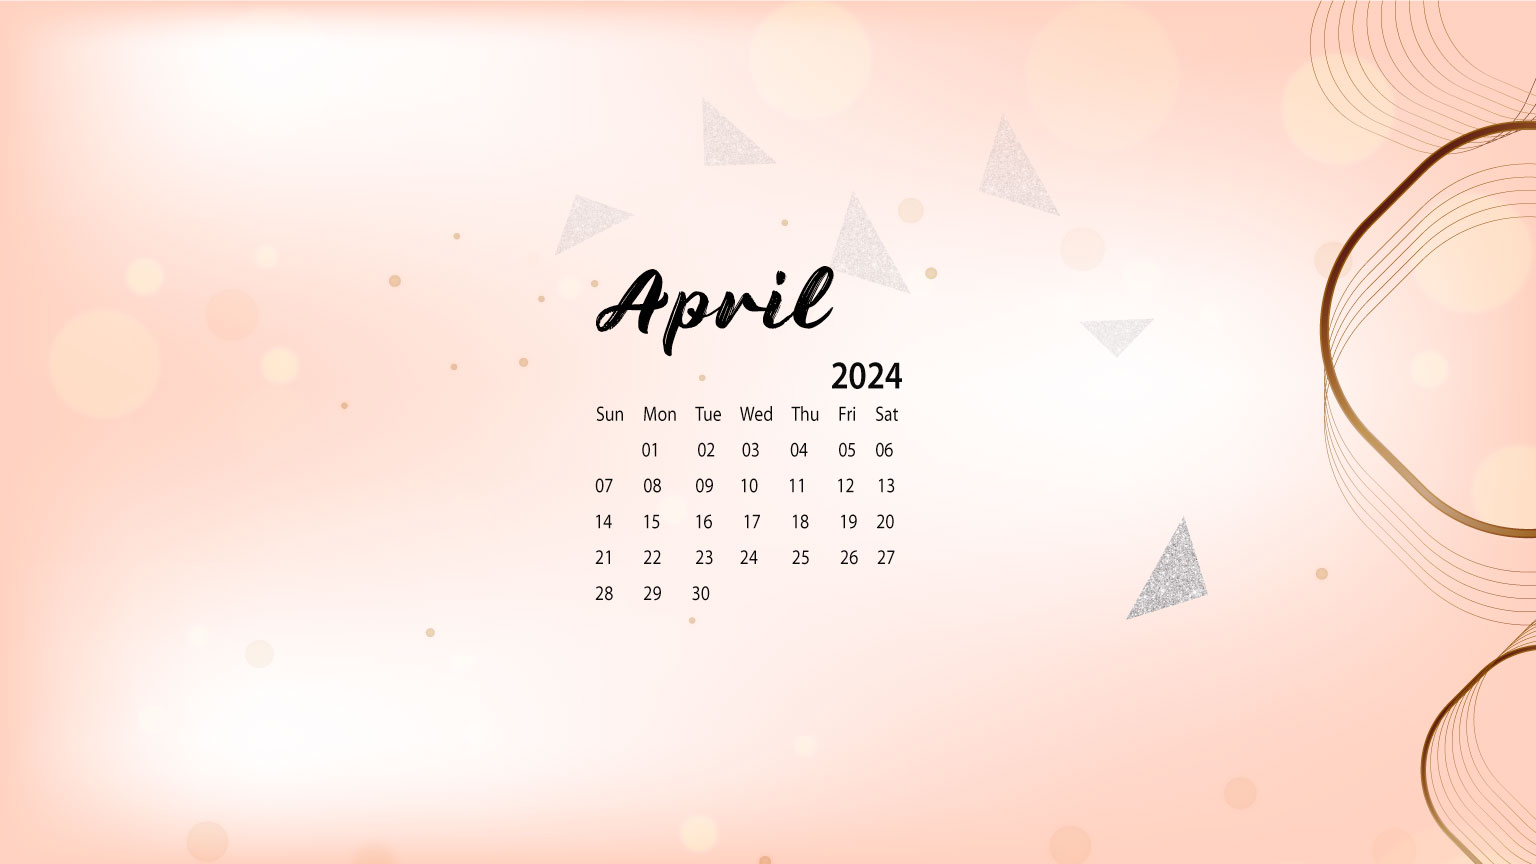 April 2024 Desktop Wallpaper Calendar - Calendarlabs intended for April 2024 Calendar Background